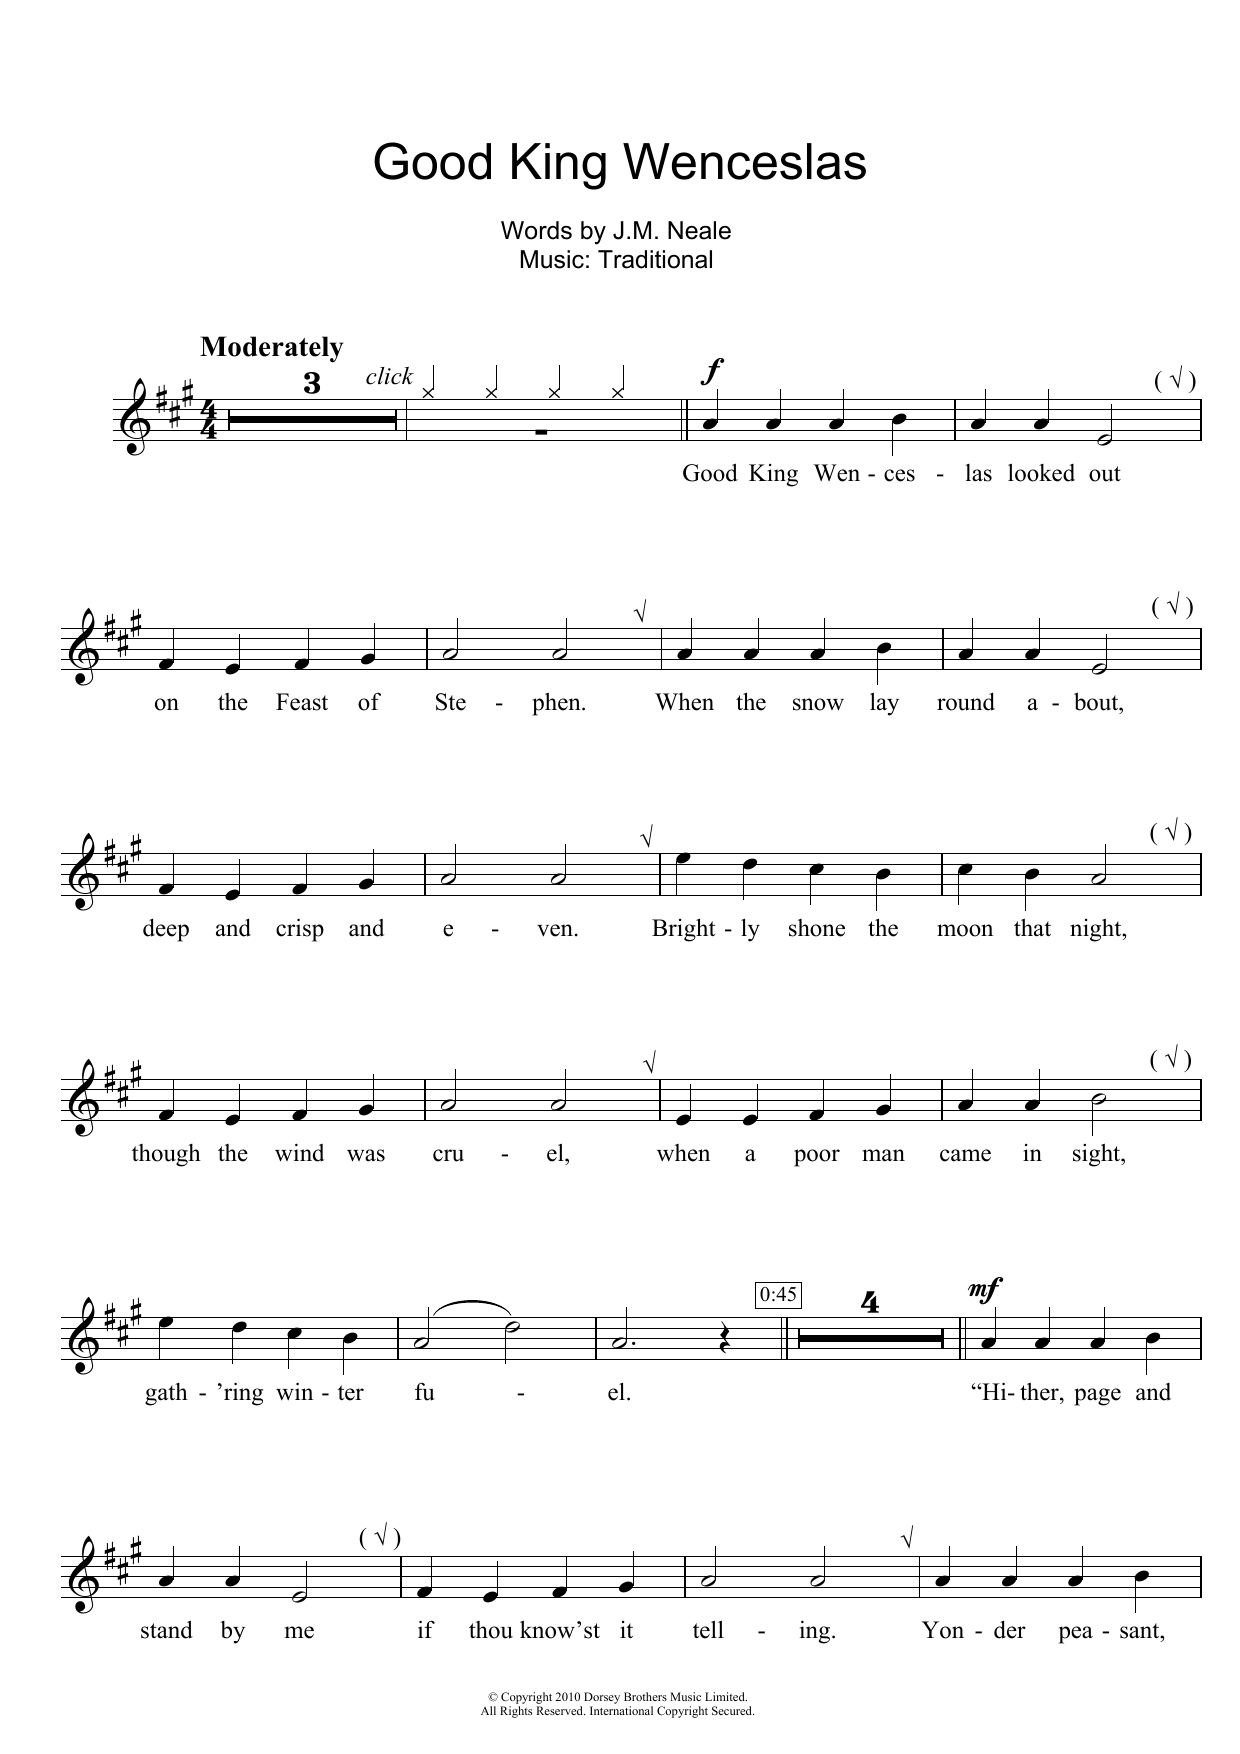 Traditional Carol Good King Wenceslas Sheet Music Notes & Chords for Flute - Download or Print PDF